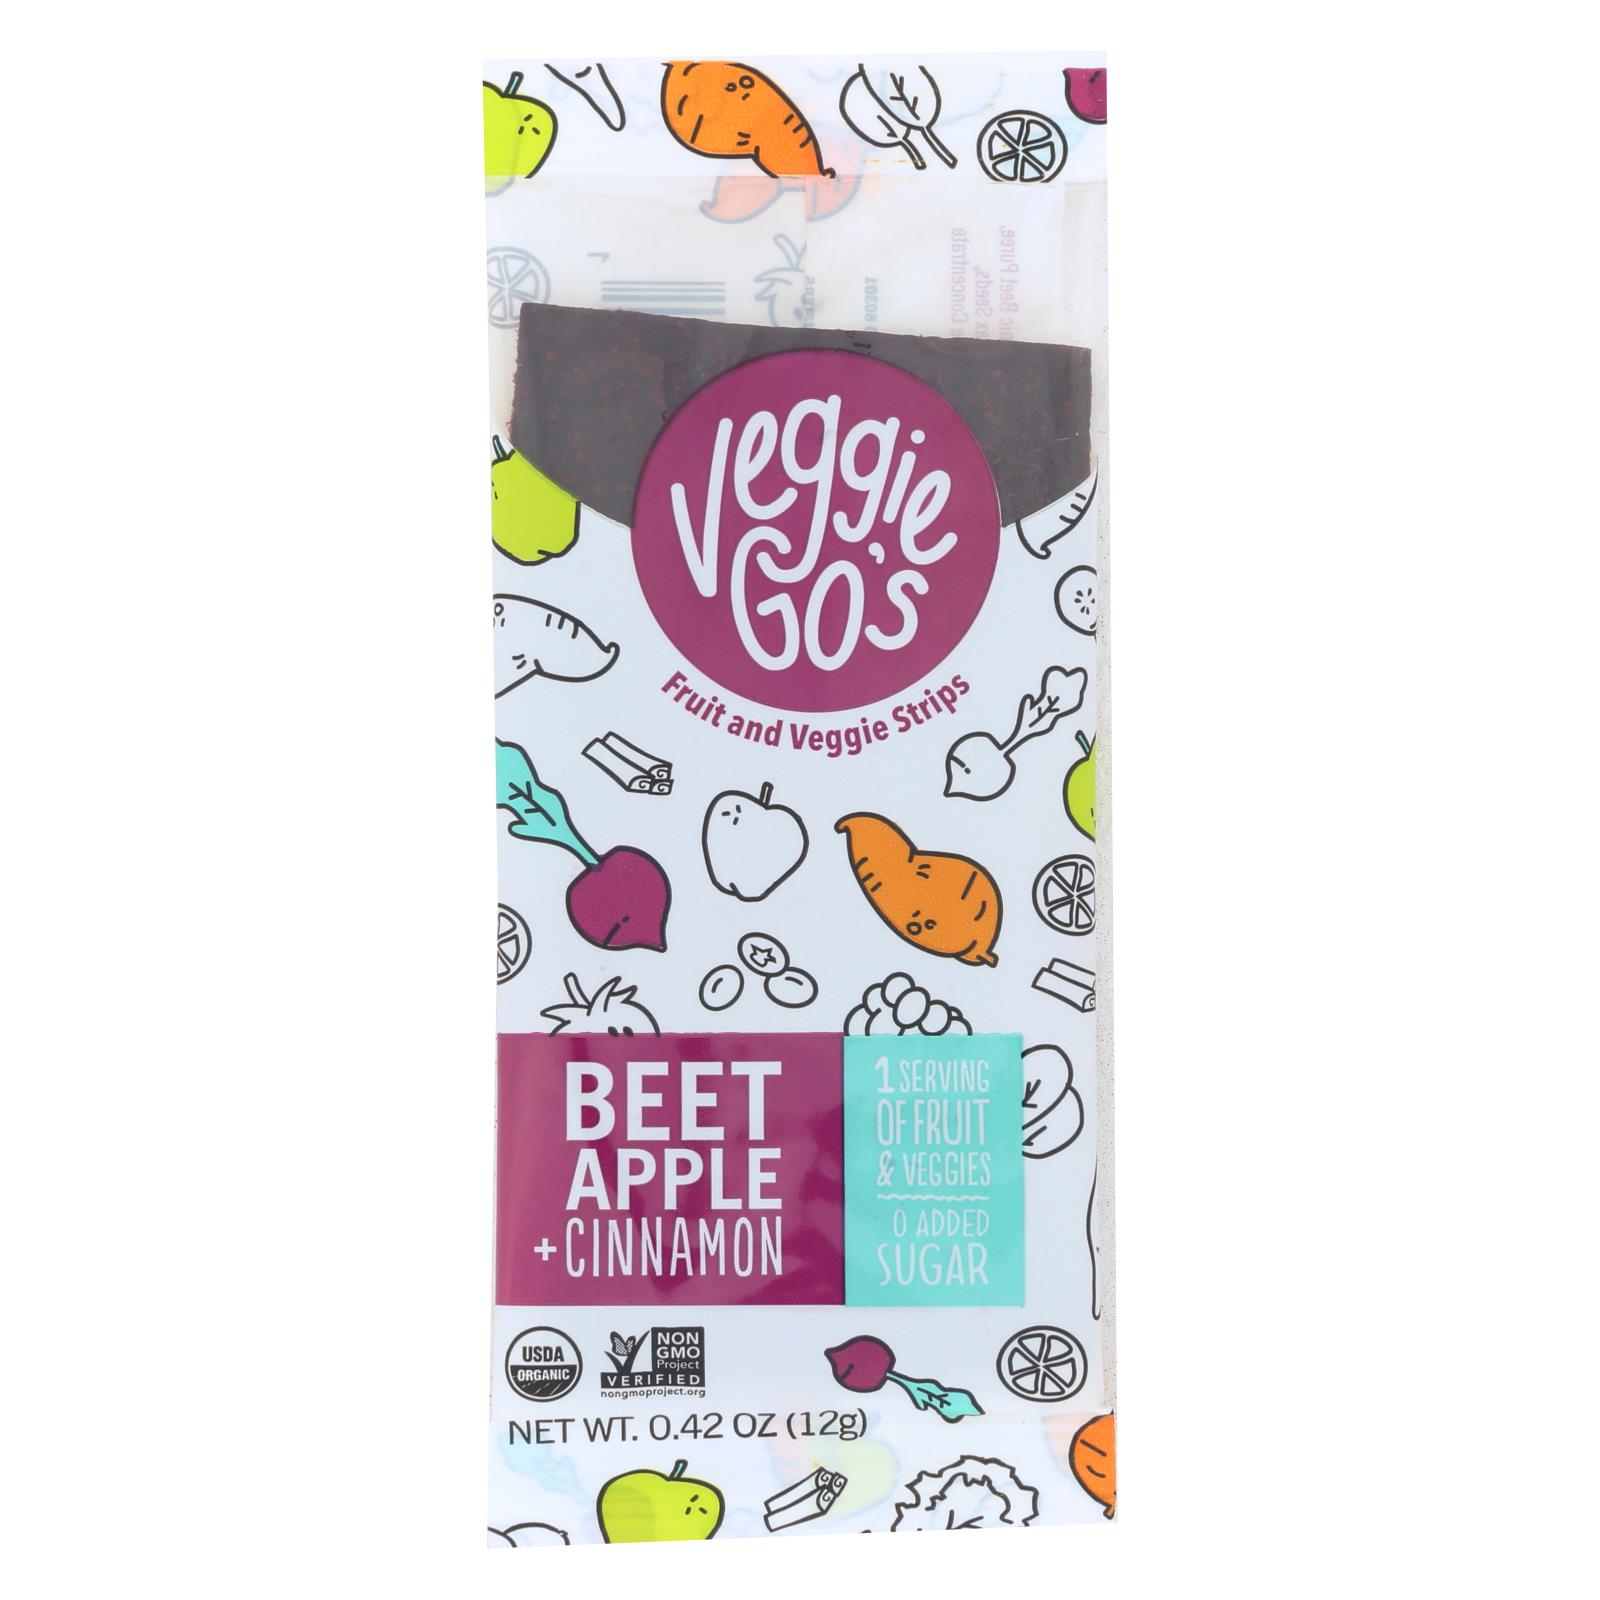 Beet Apple + Cinnamon Veggie-Go’S Strips - Case of 20 - .42 OZ